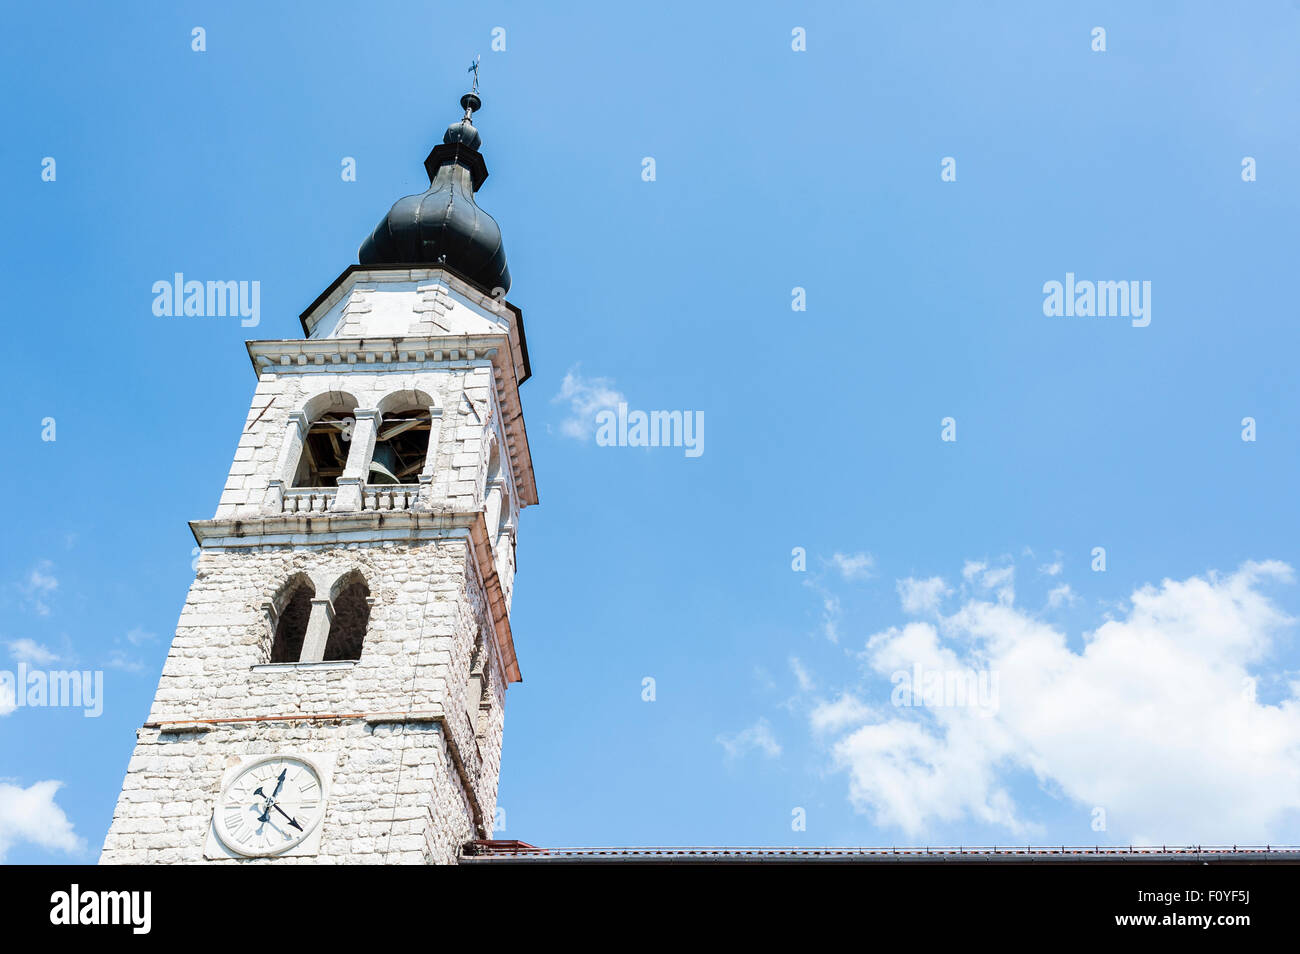 Glockenturm einer Kirche in Norditalien Stockfoto